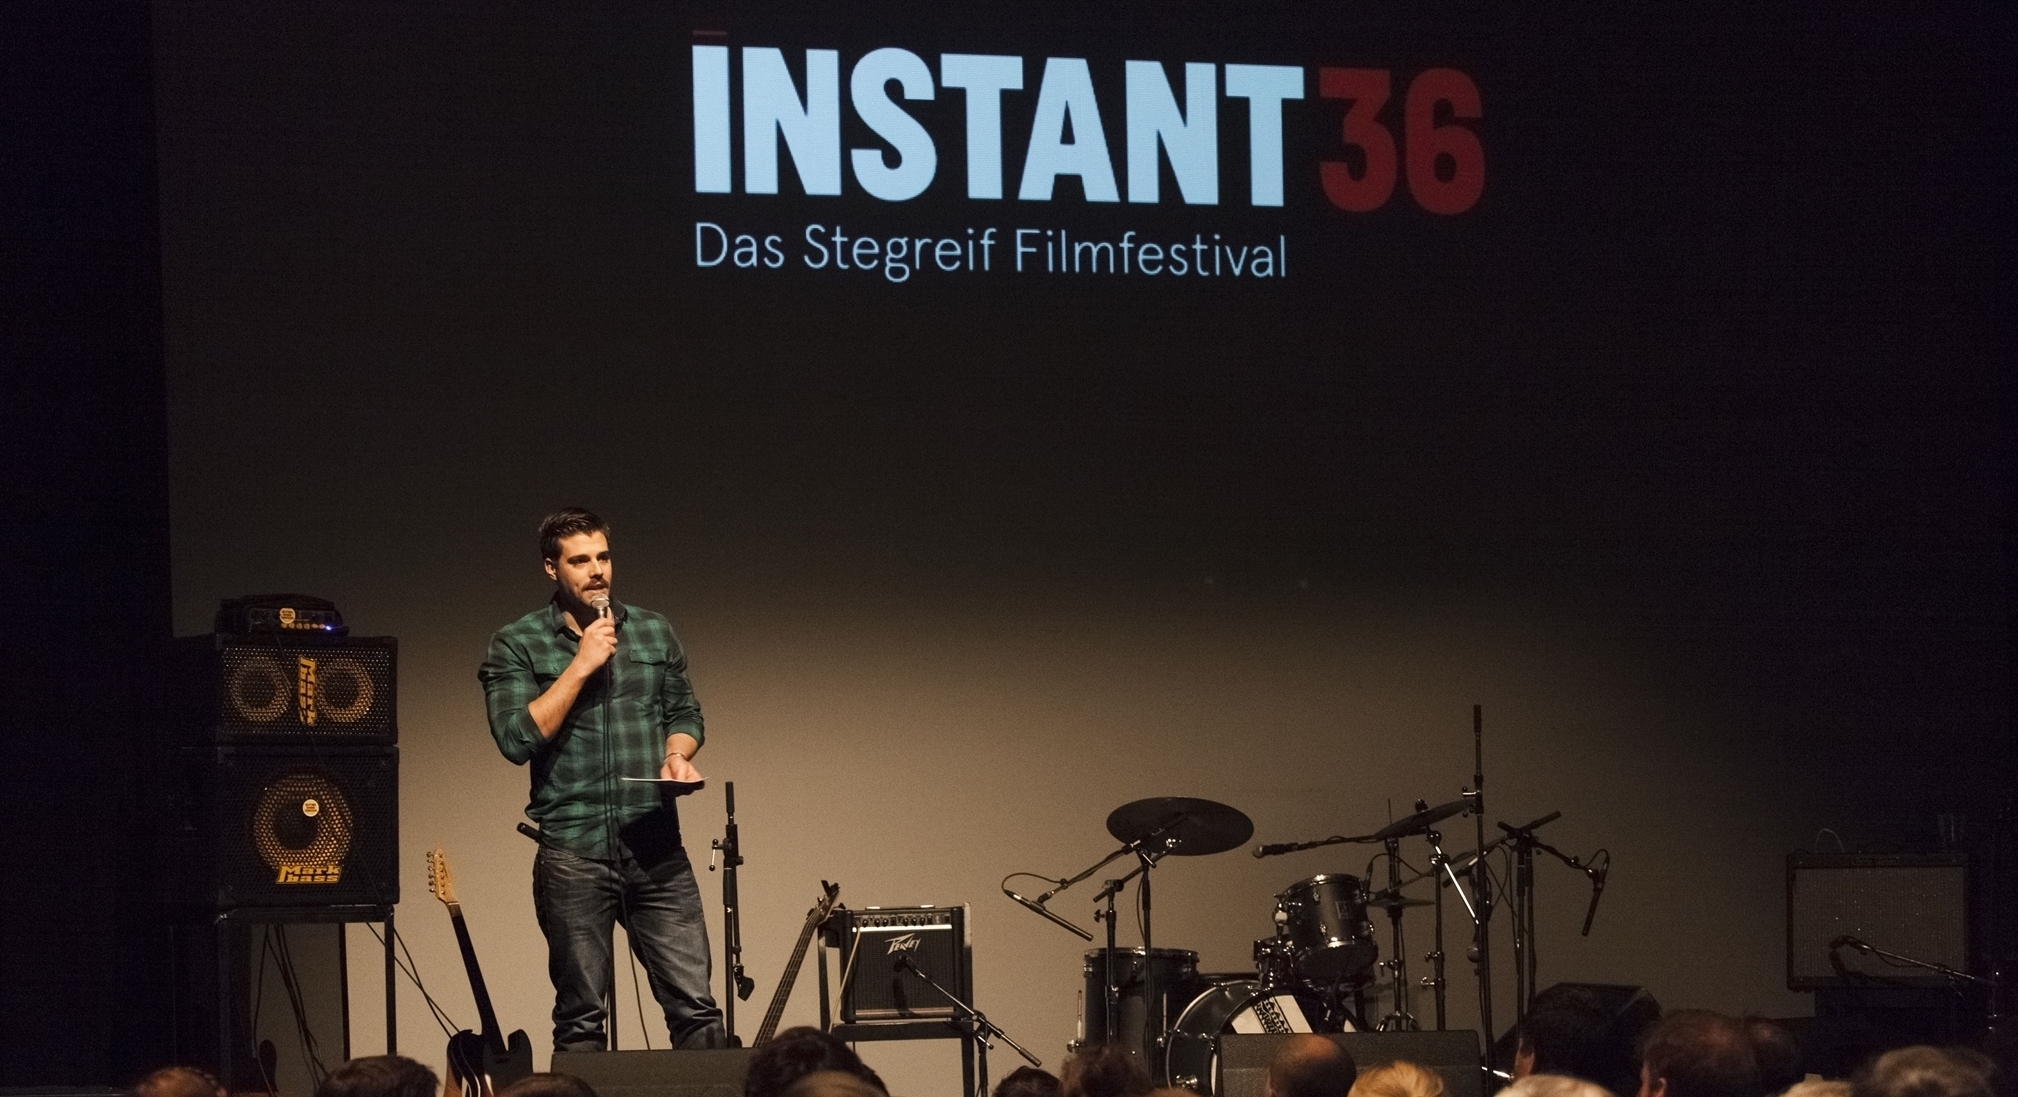 INSTANT36 – DAS STEGREIF-FILMFESTIVAL am 20.10.2018 um 19:30 Uhr